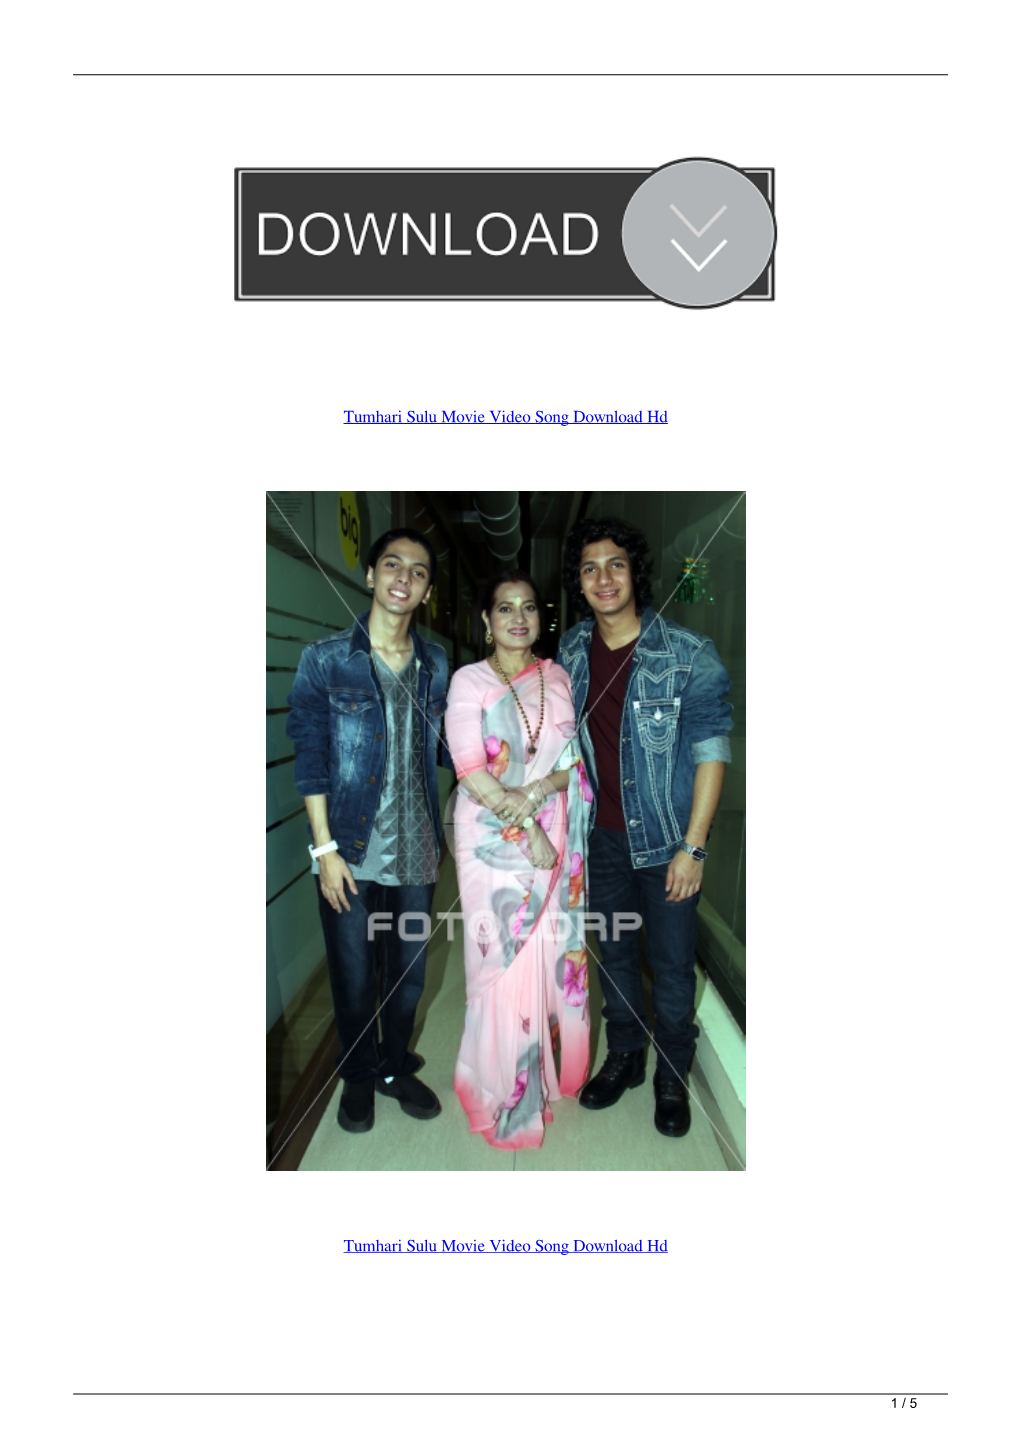 Tumhari Sulu Movie Video Song Download Hd